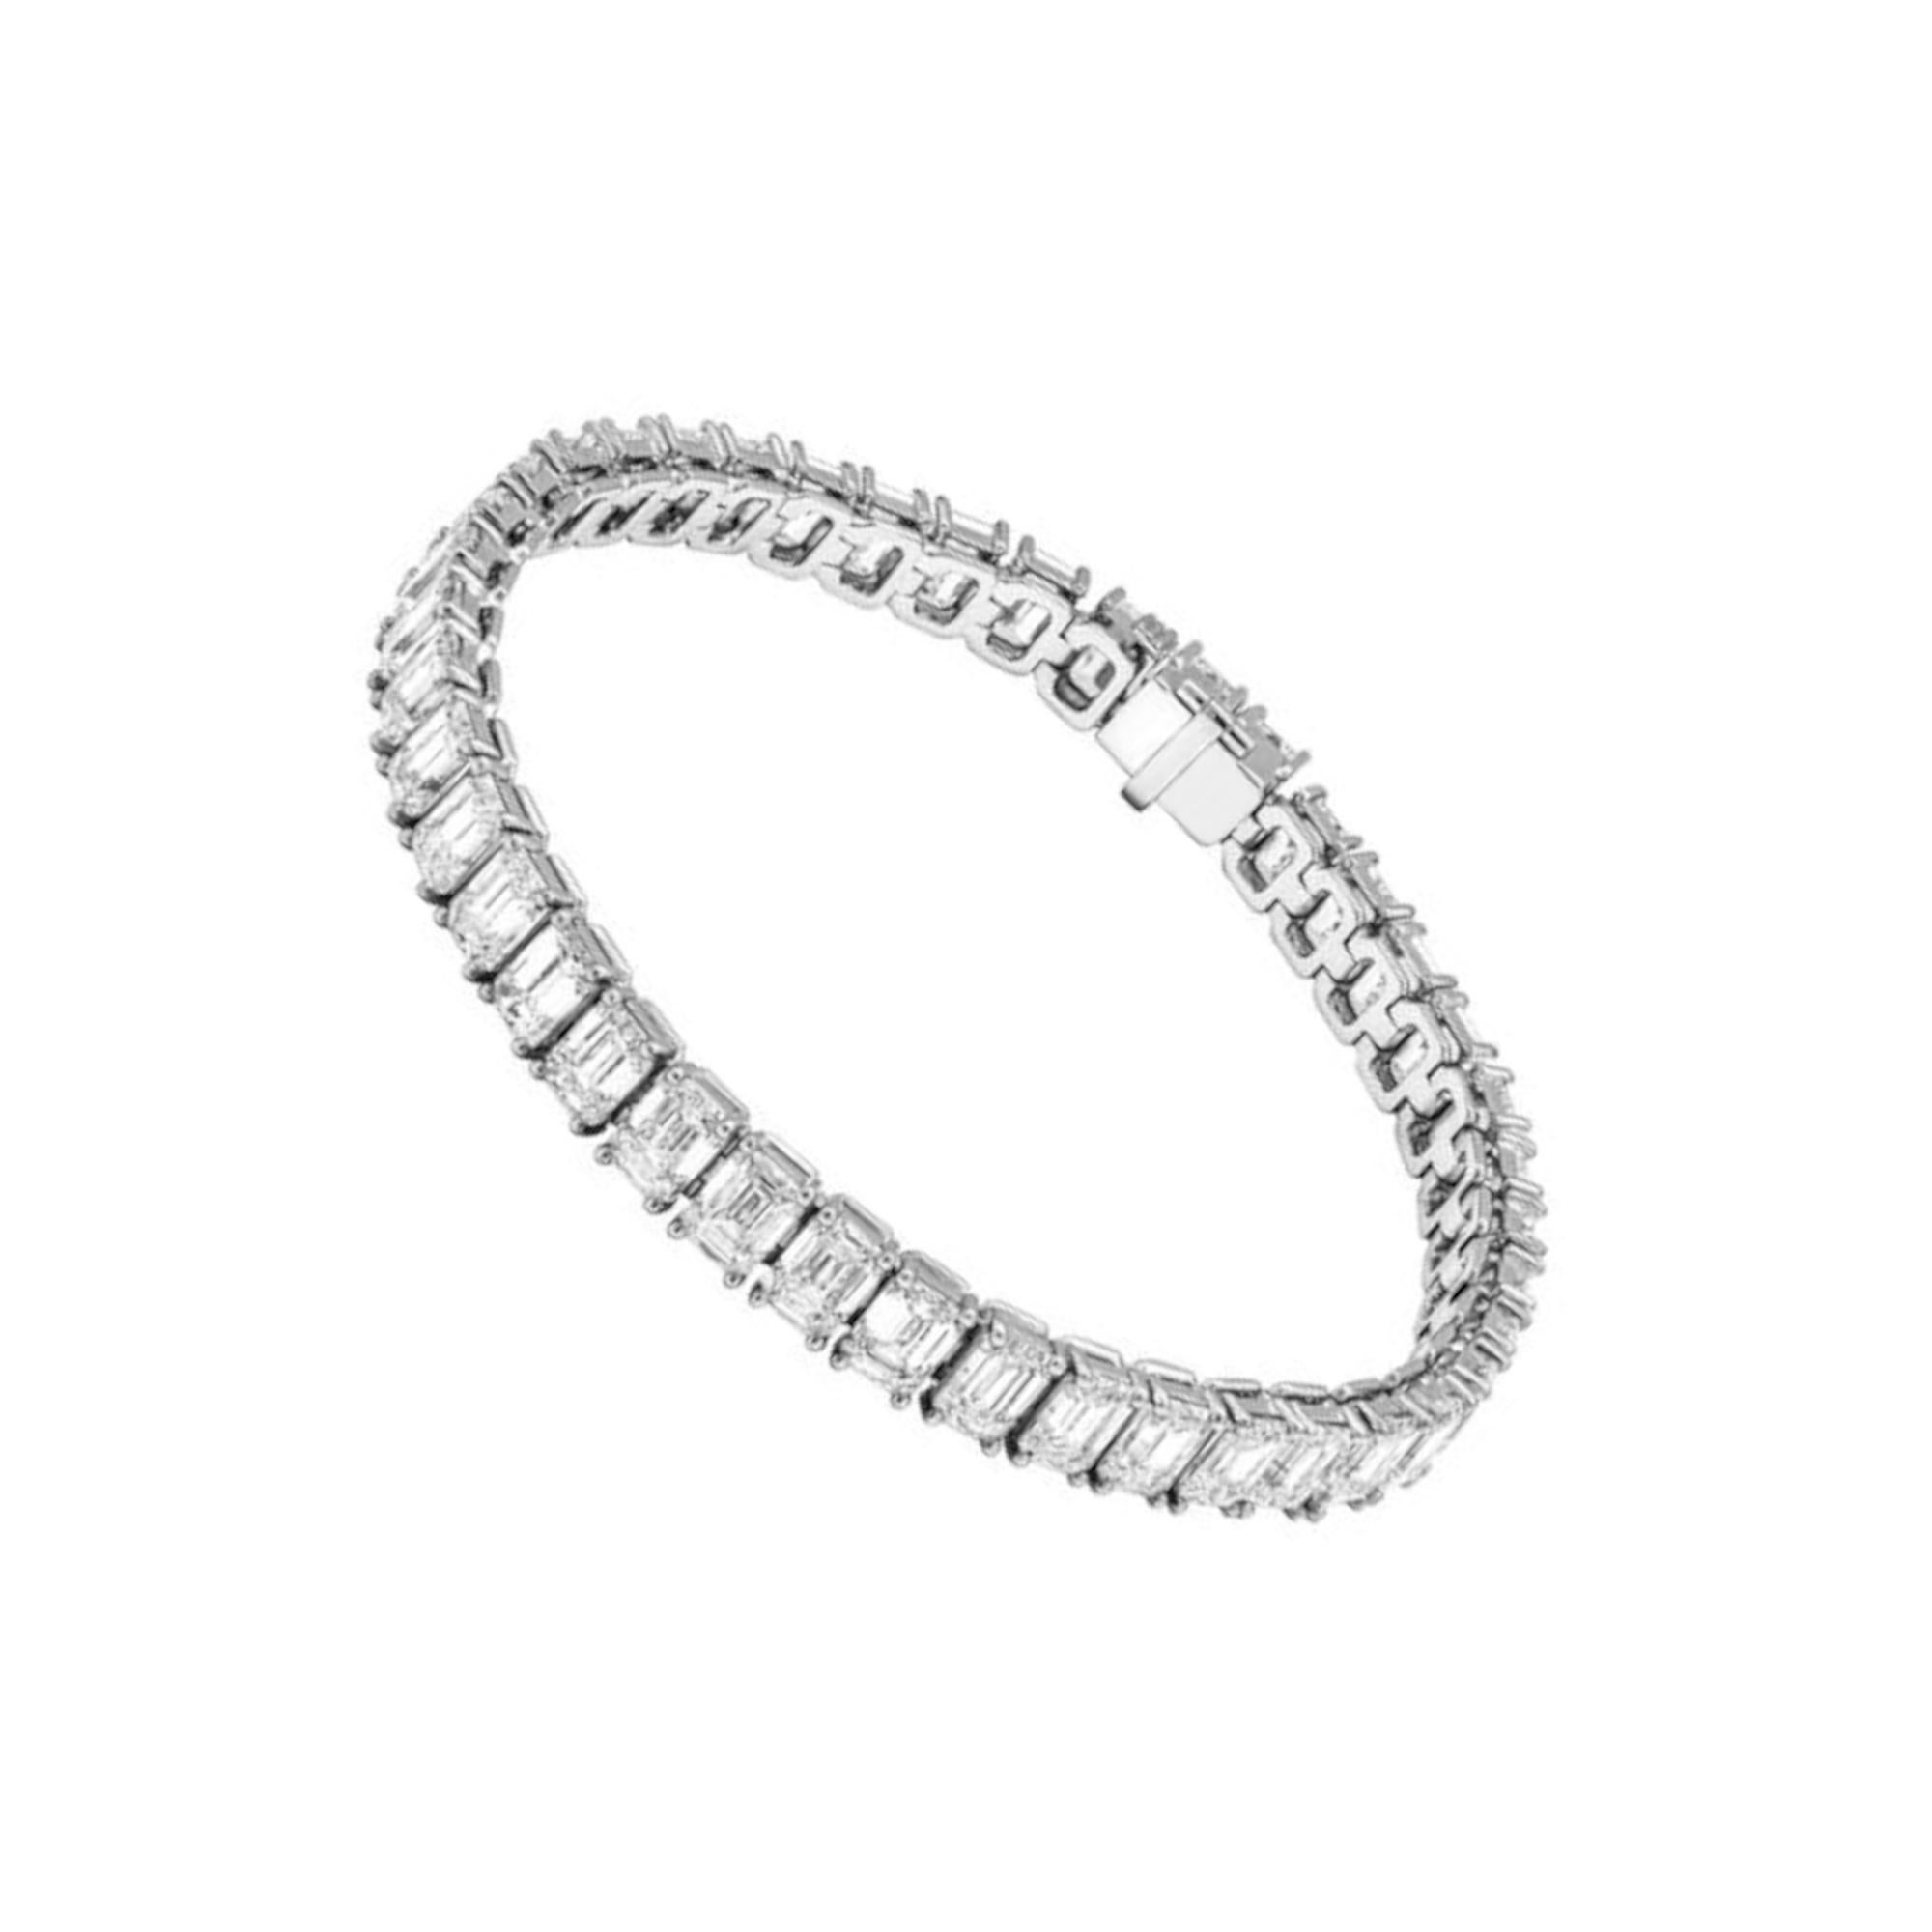 15 carat diamond bracelet